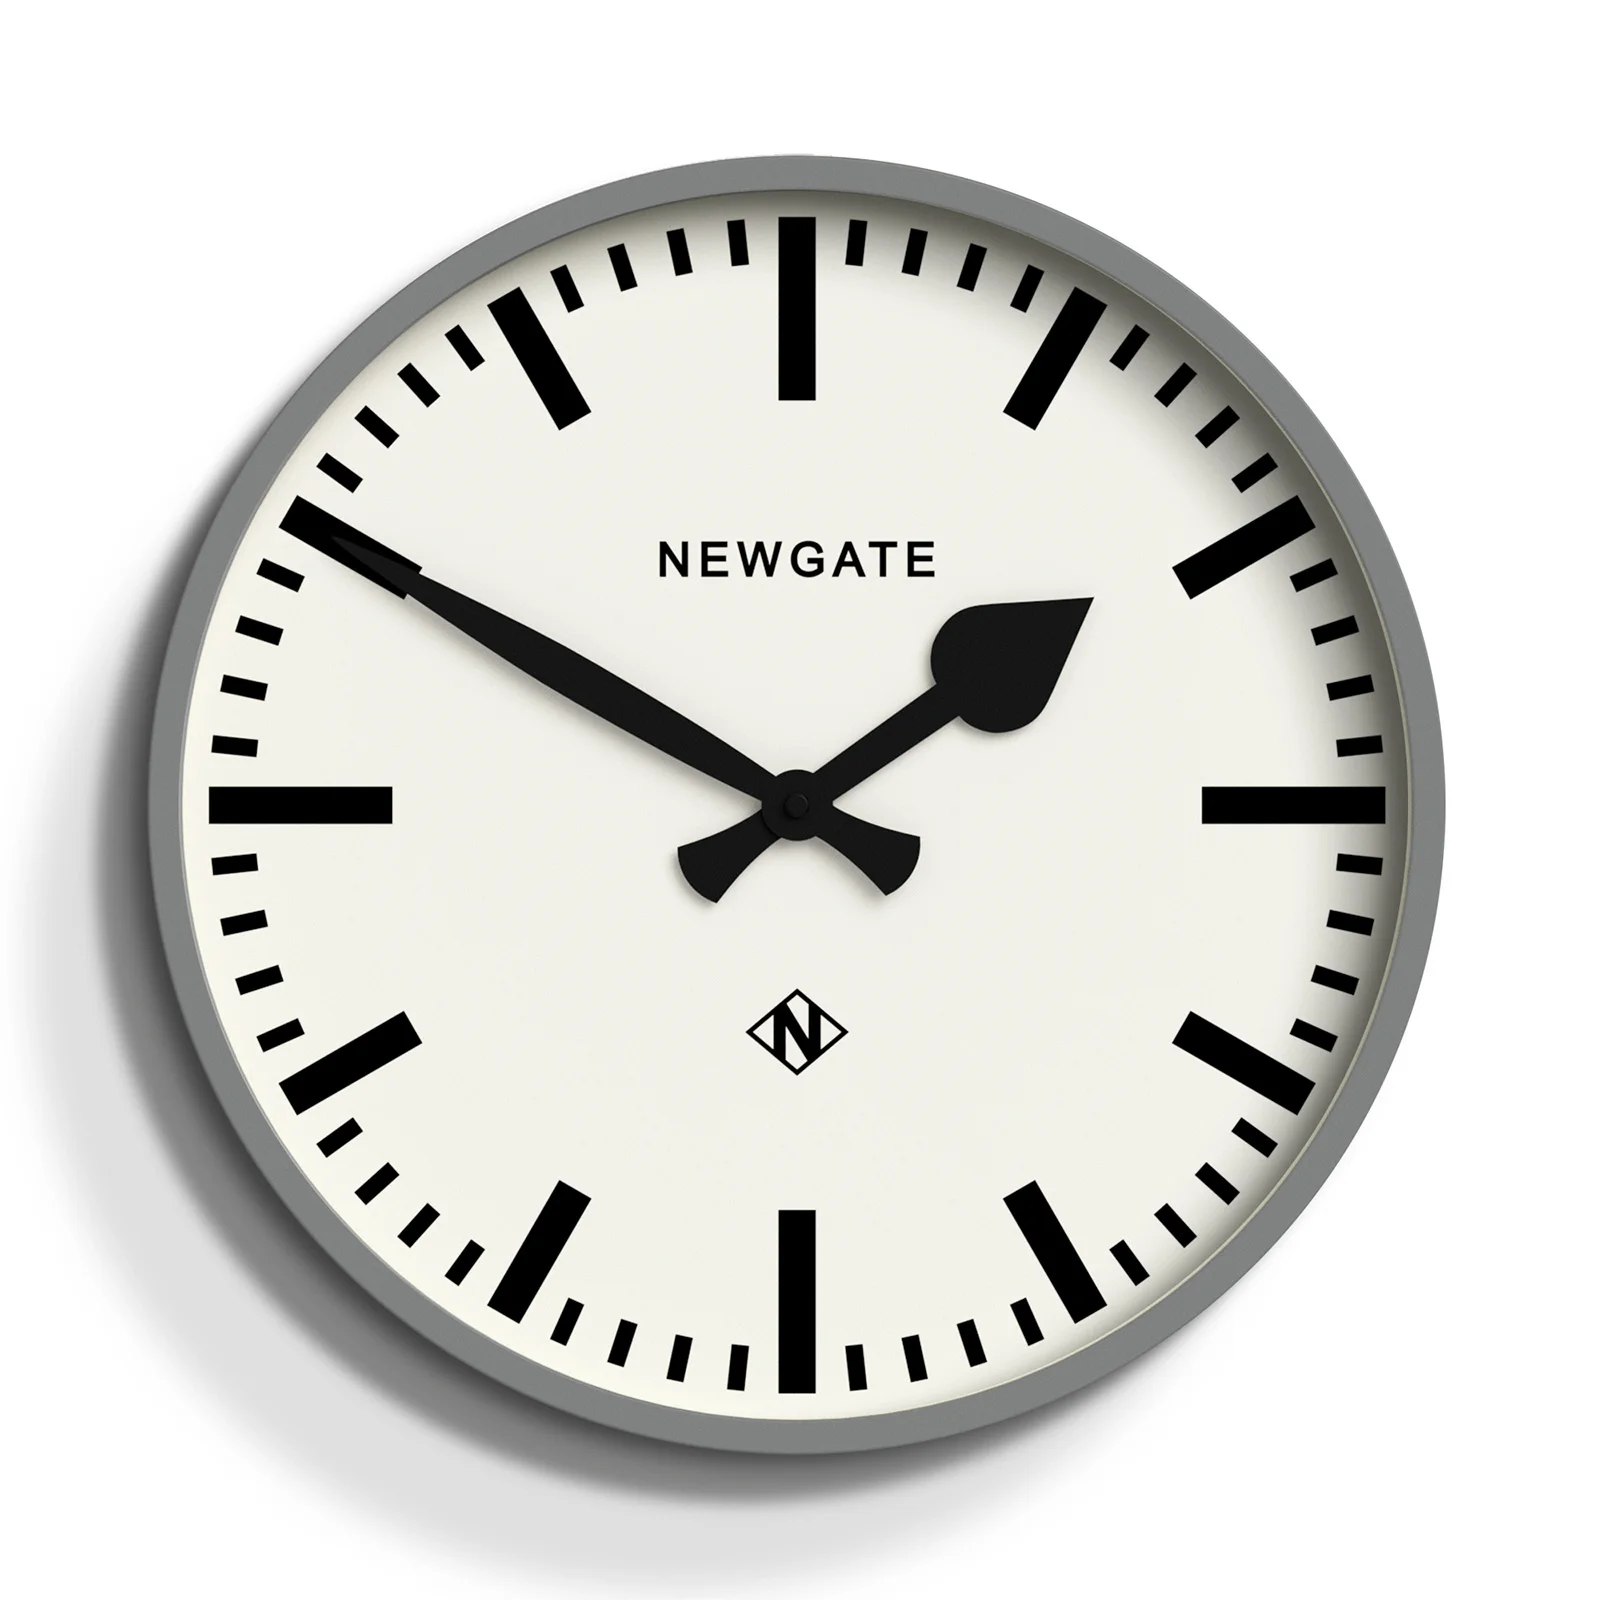 Newgate Number Three Railway Wall Clock - Grey Image 1